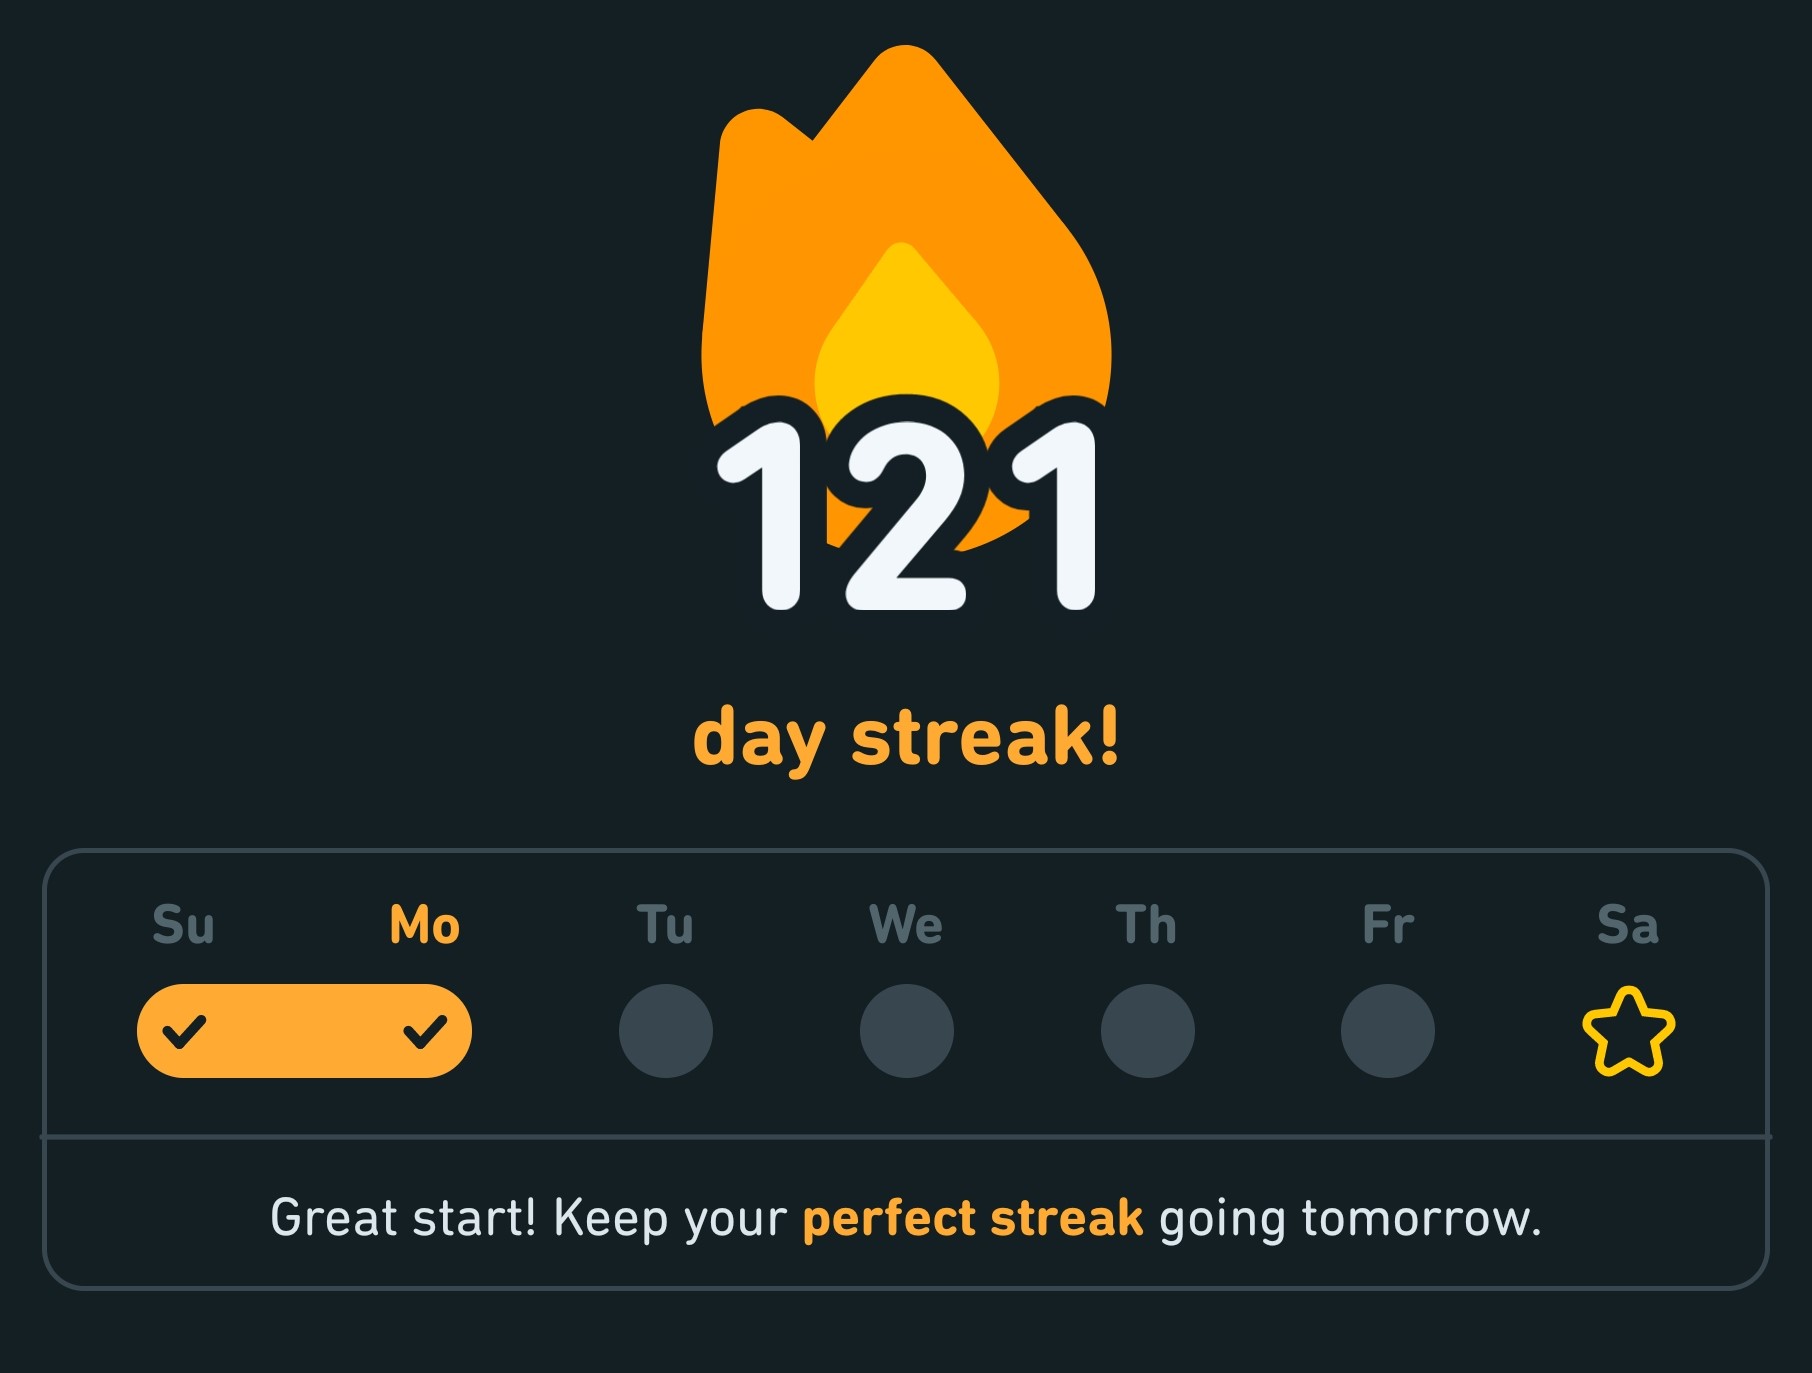 Screenshot of streak representation in Duolingo